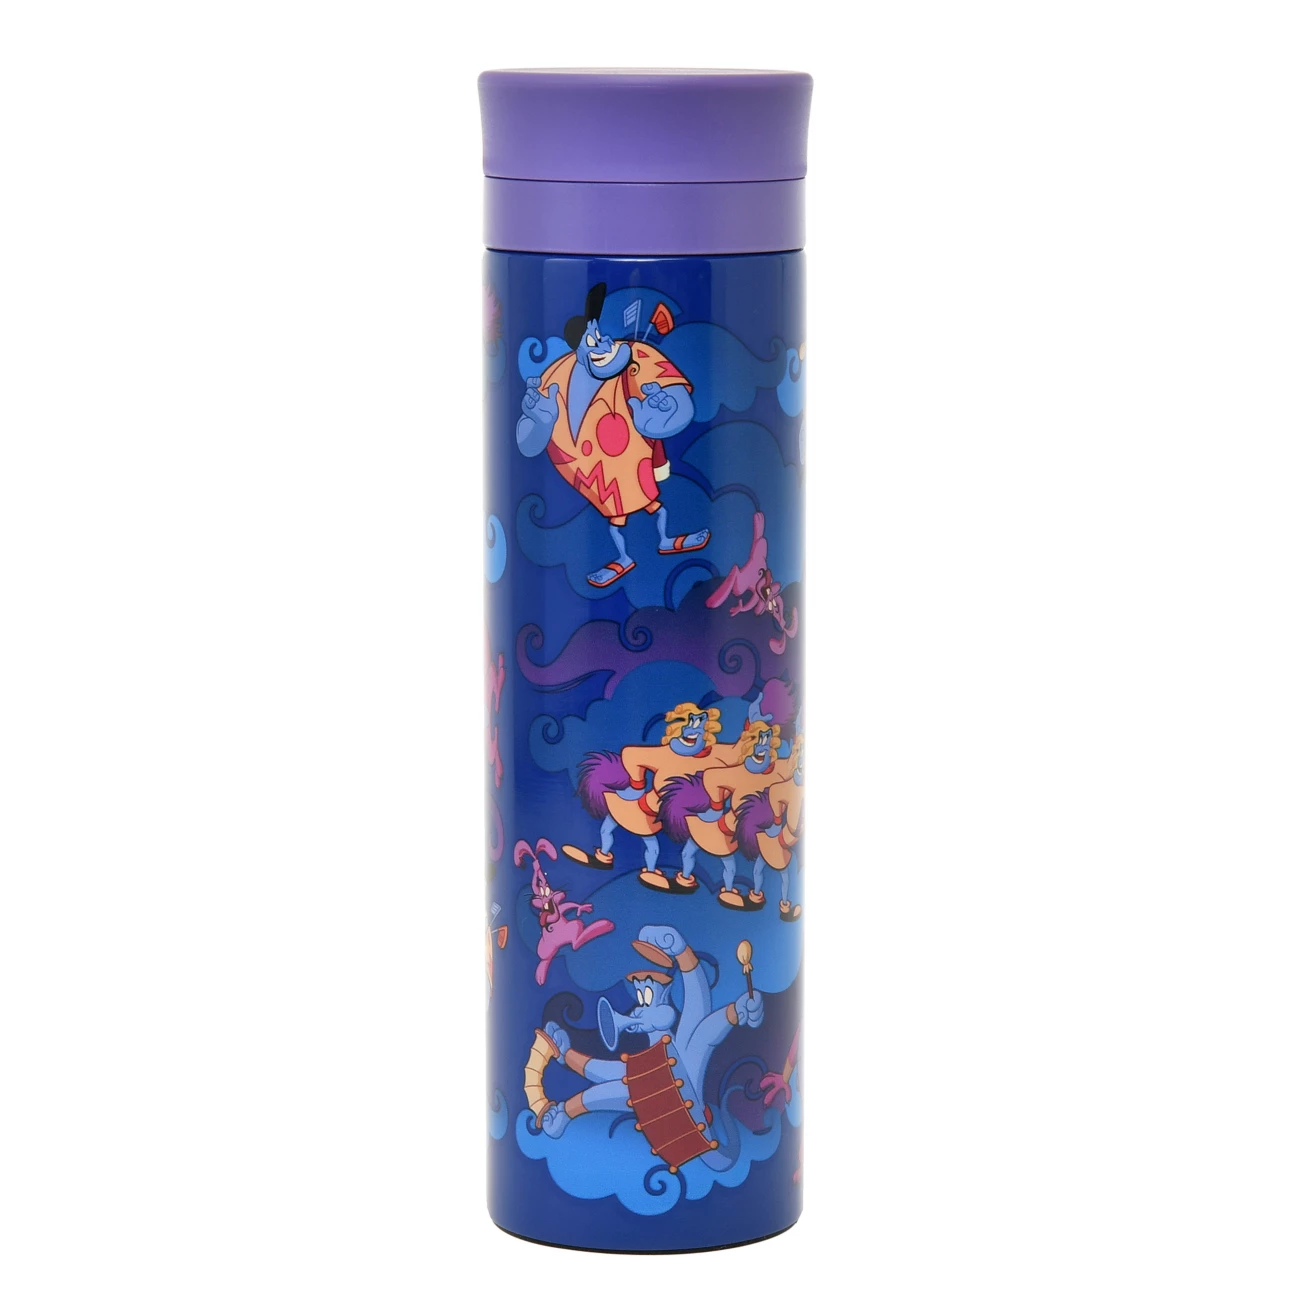 SDJ - Aladdin 30th Anniversary Collection - Water bottle